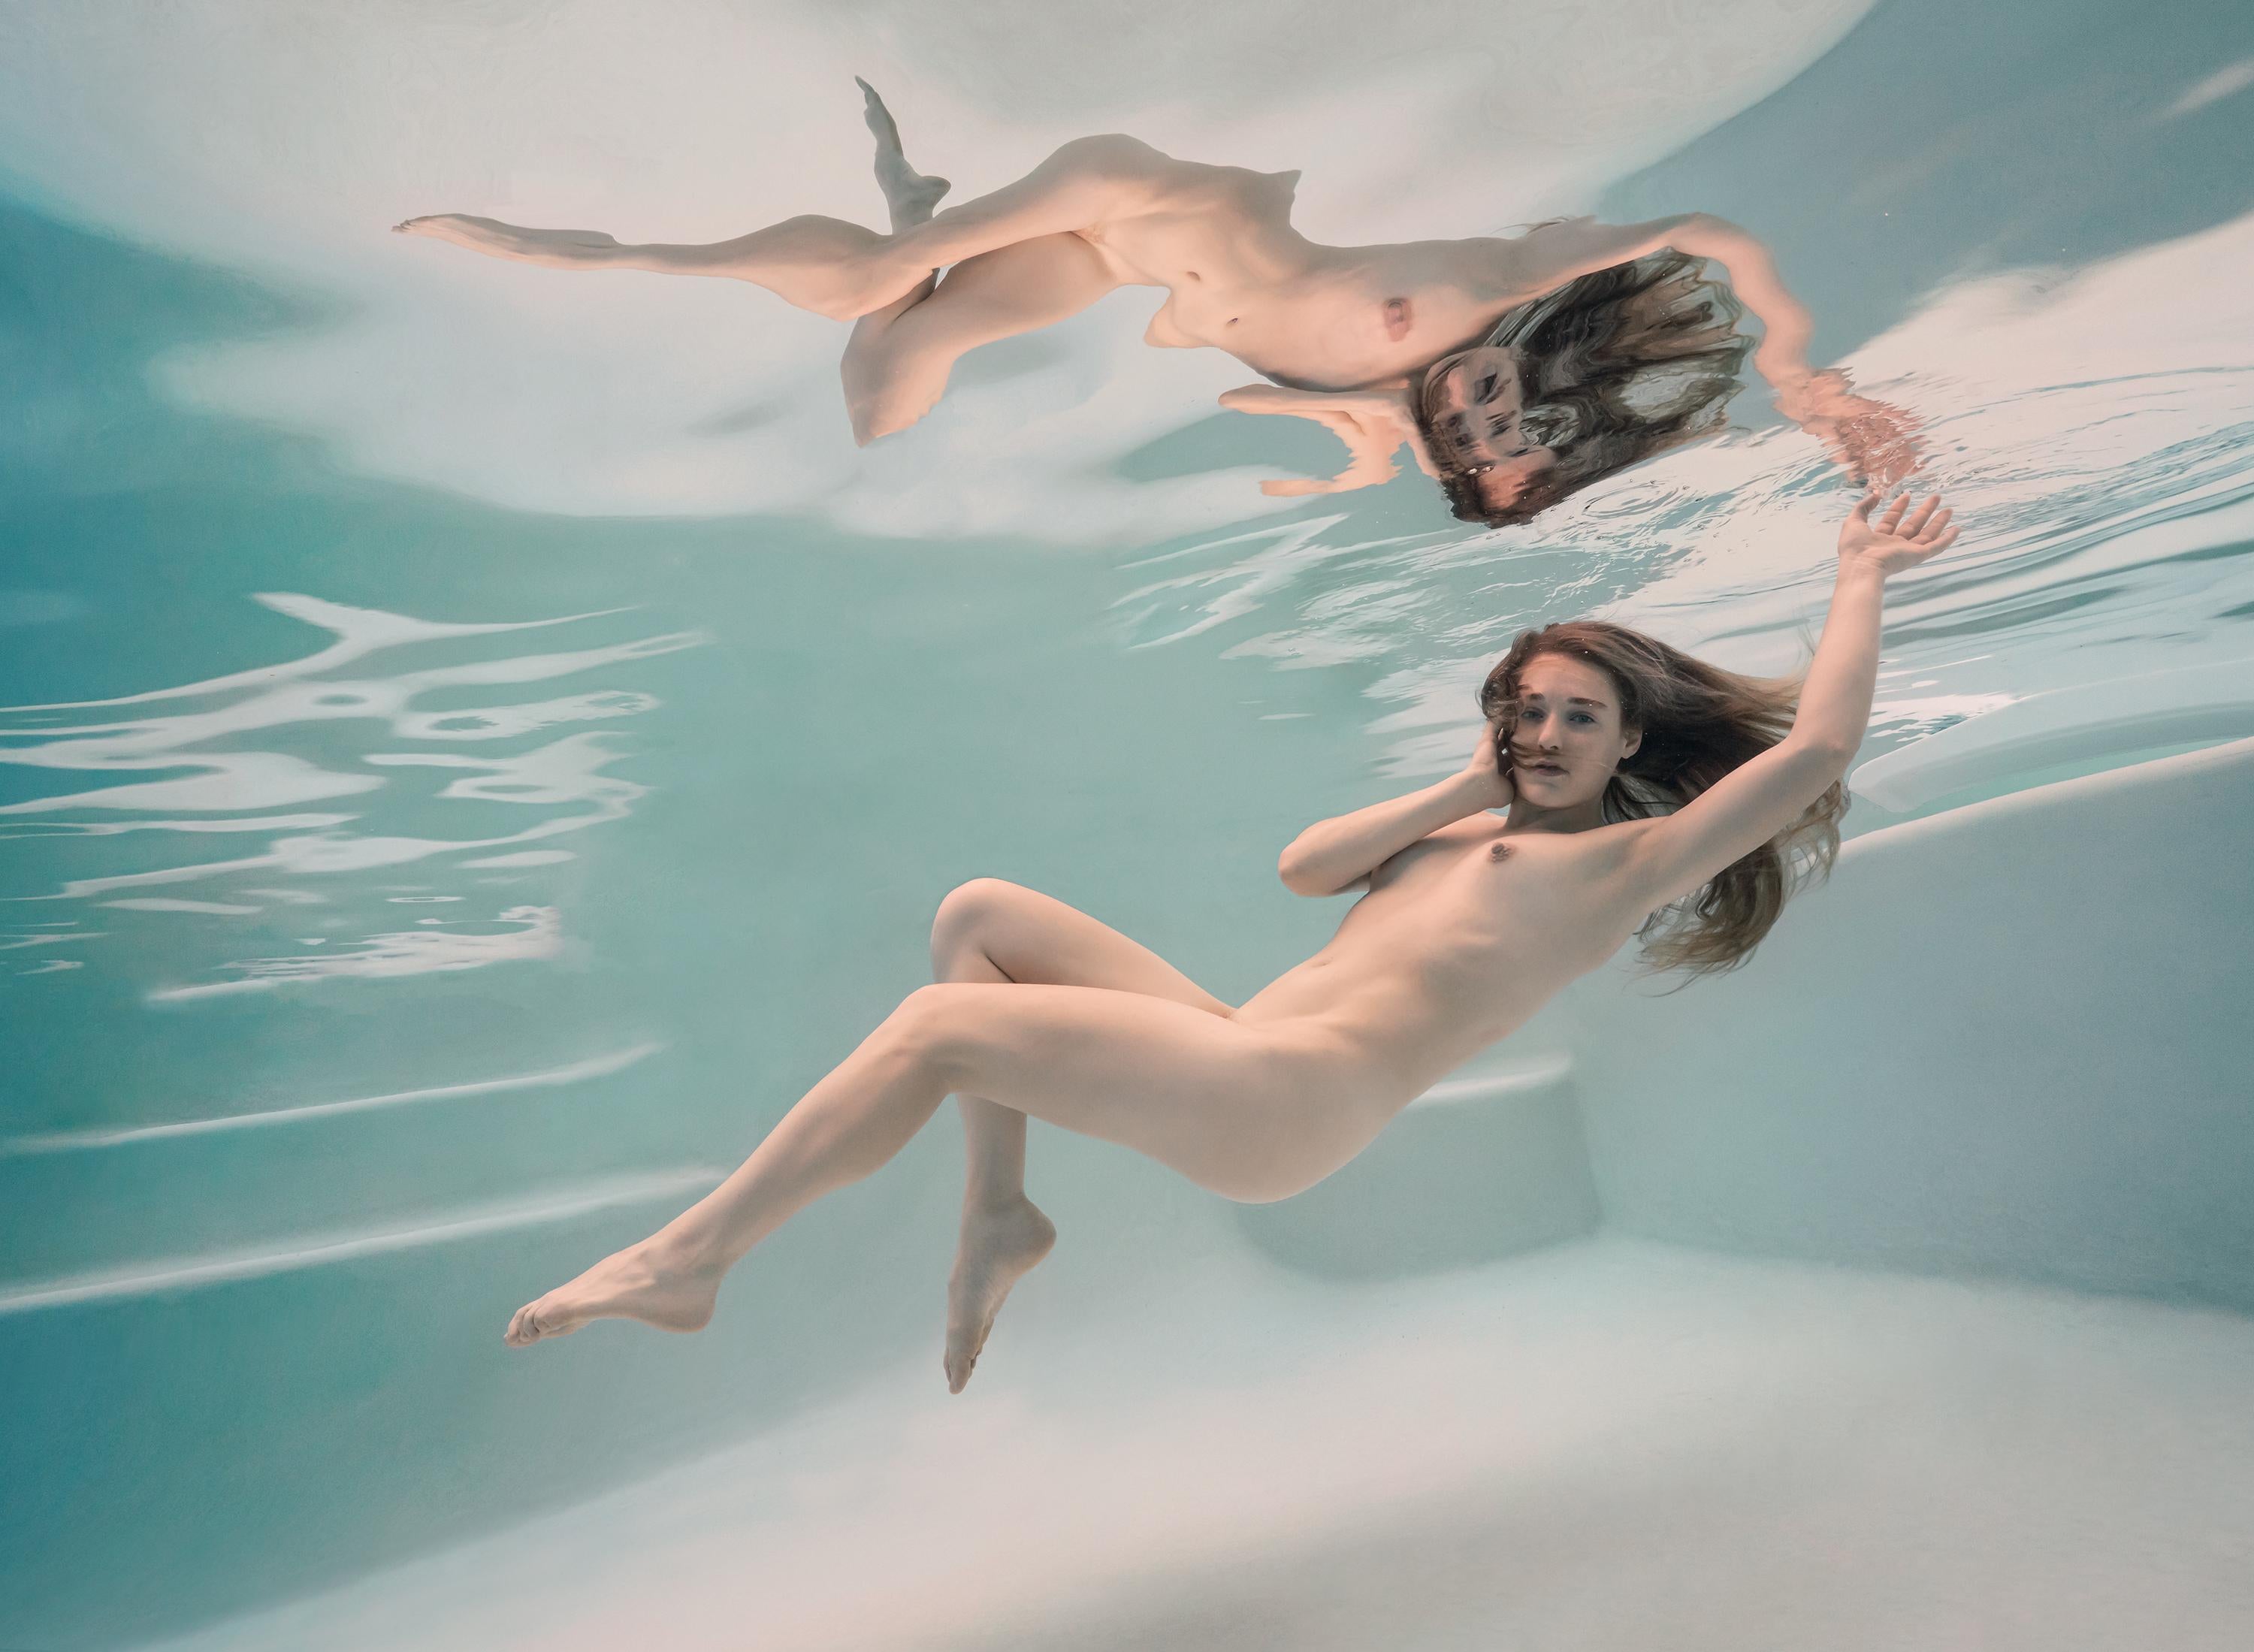 Alex Sher Nude Photograph - Zero Gravity Lounge III - underwater nude photograph - archival pigment 18x24"